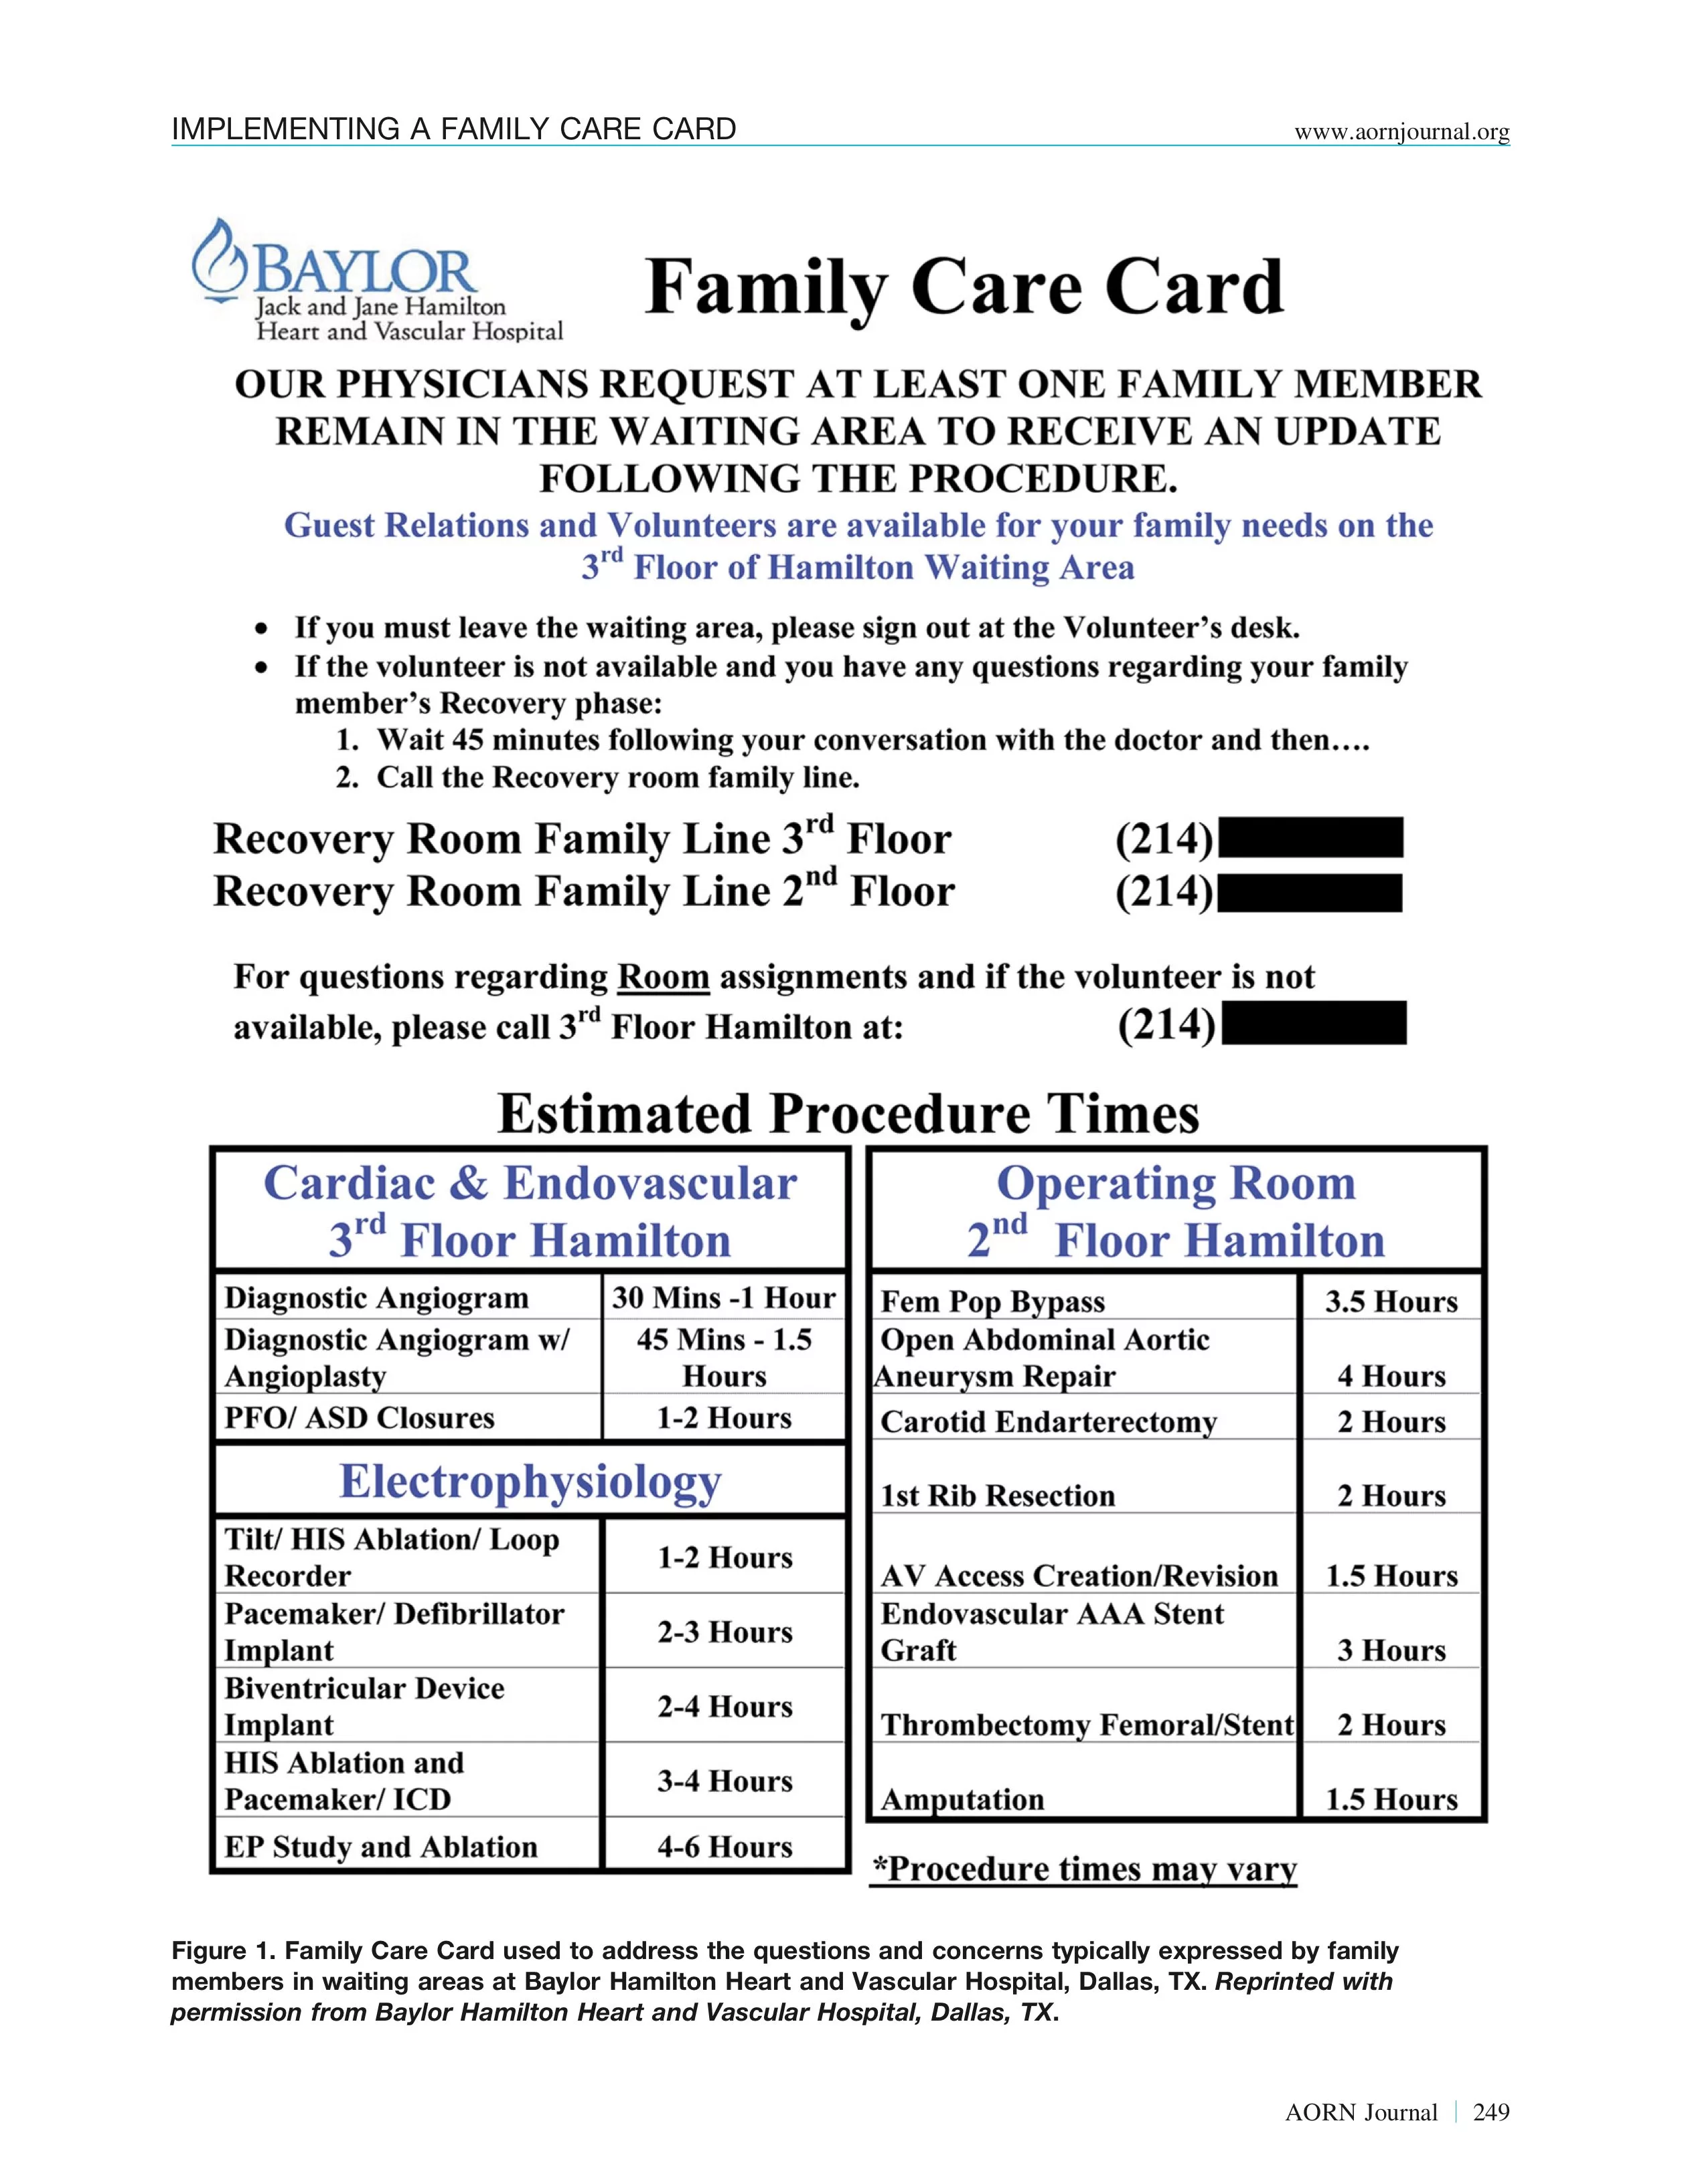 Imagen de muestra de la tarjeta Family Care